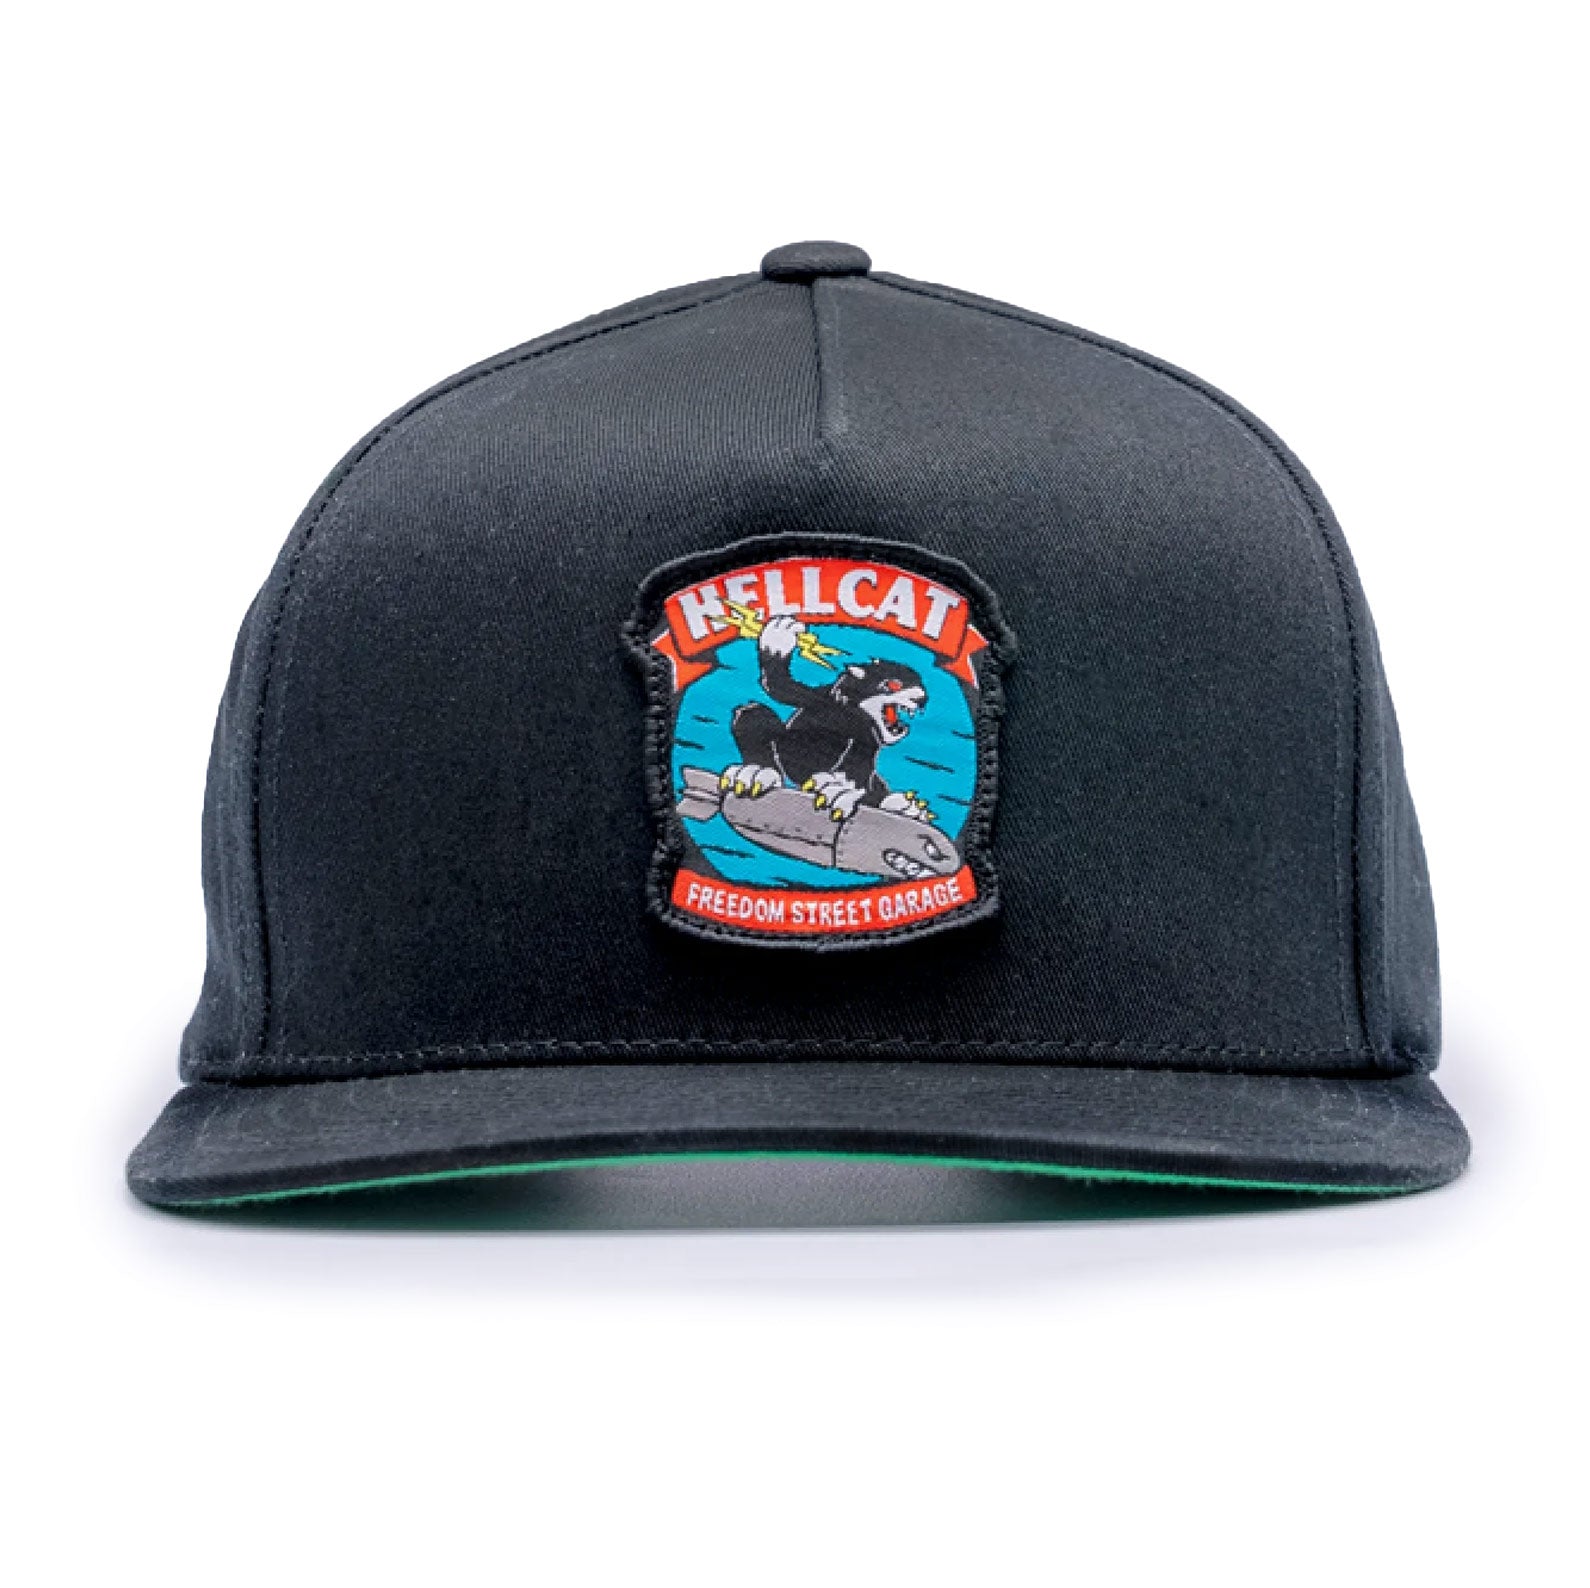 Hellcat Patch Hat